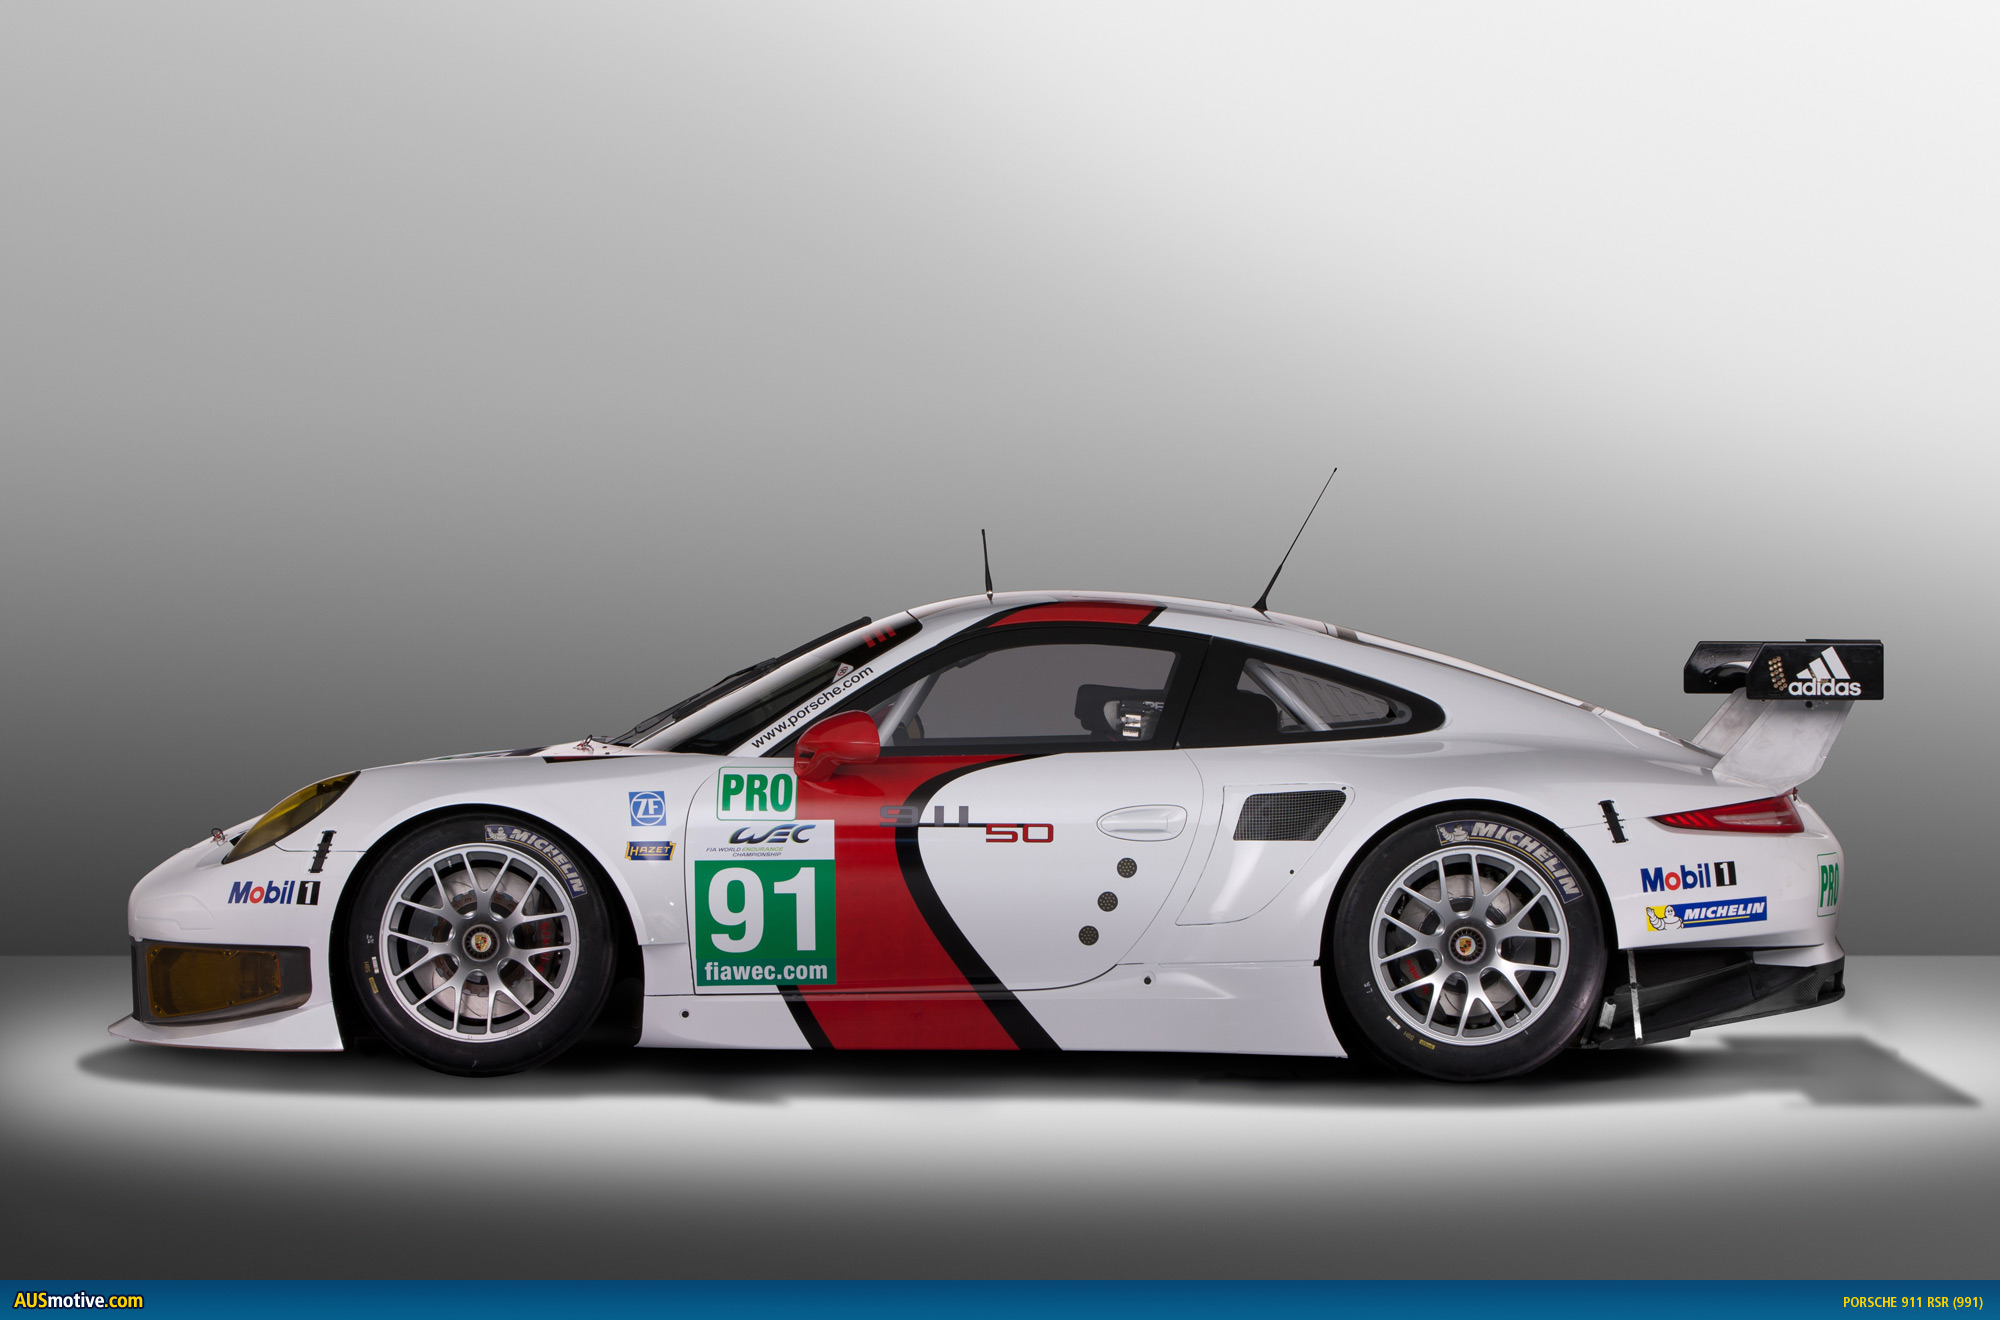 » 2013 Porsche 911 RSR revealed